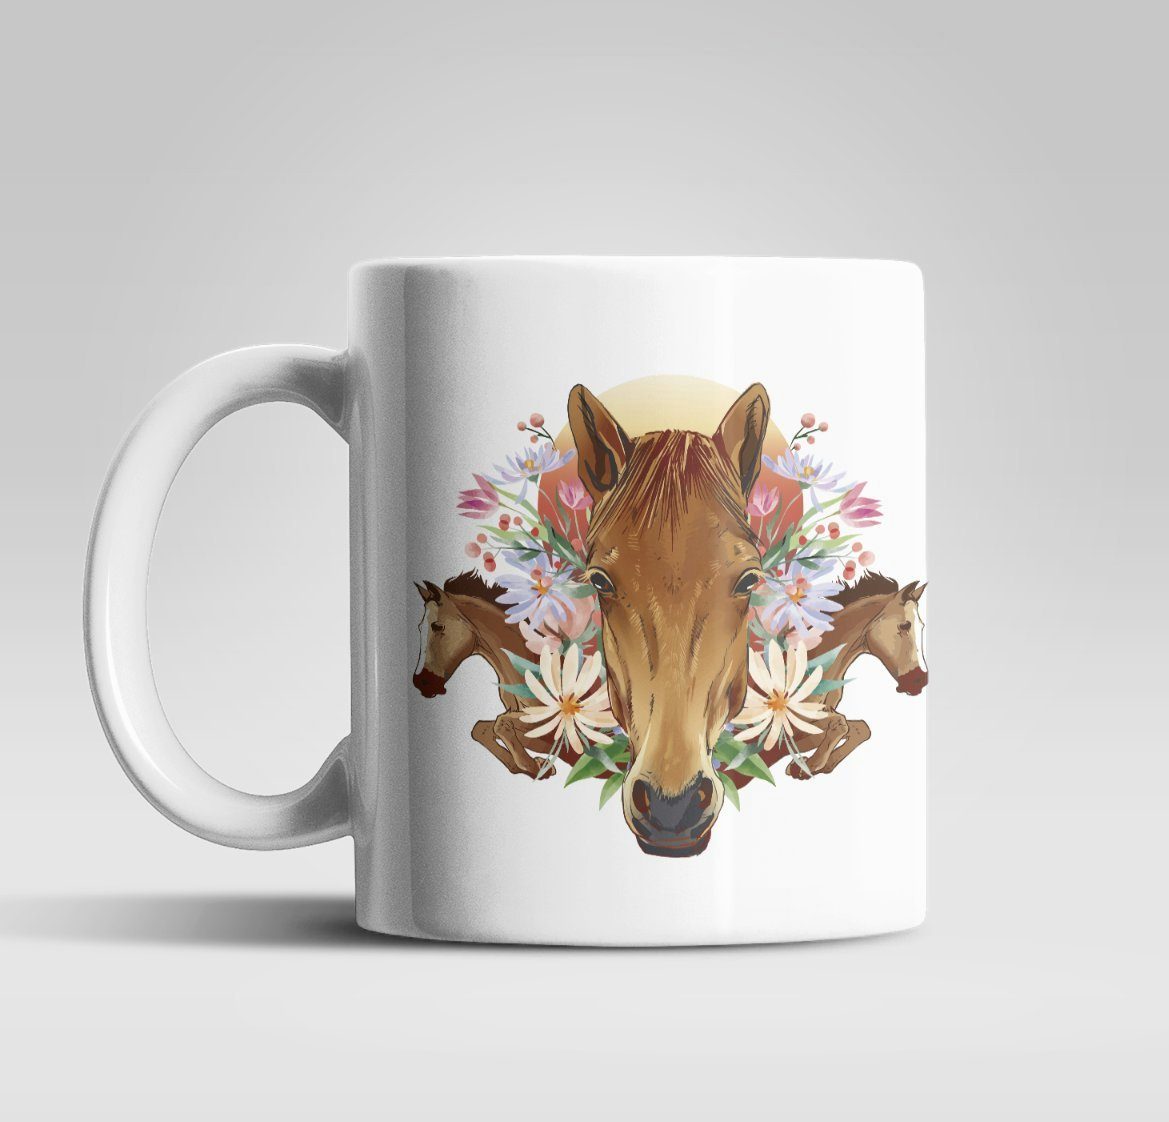 WS-Trend Tasse Pferde Kaffeetasse Teetasse mit Motiv, Keramik, 330 ml | Teetassen